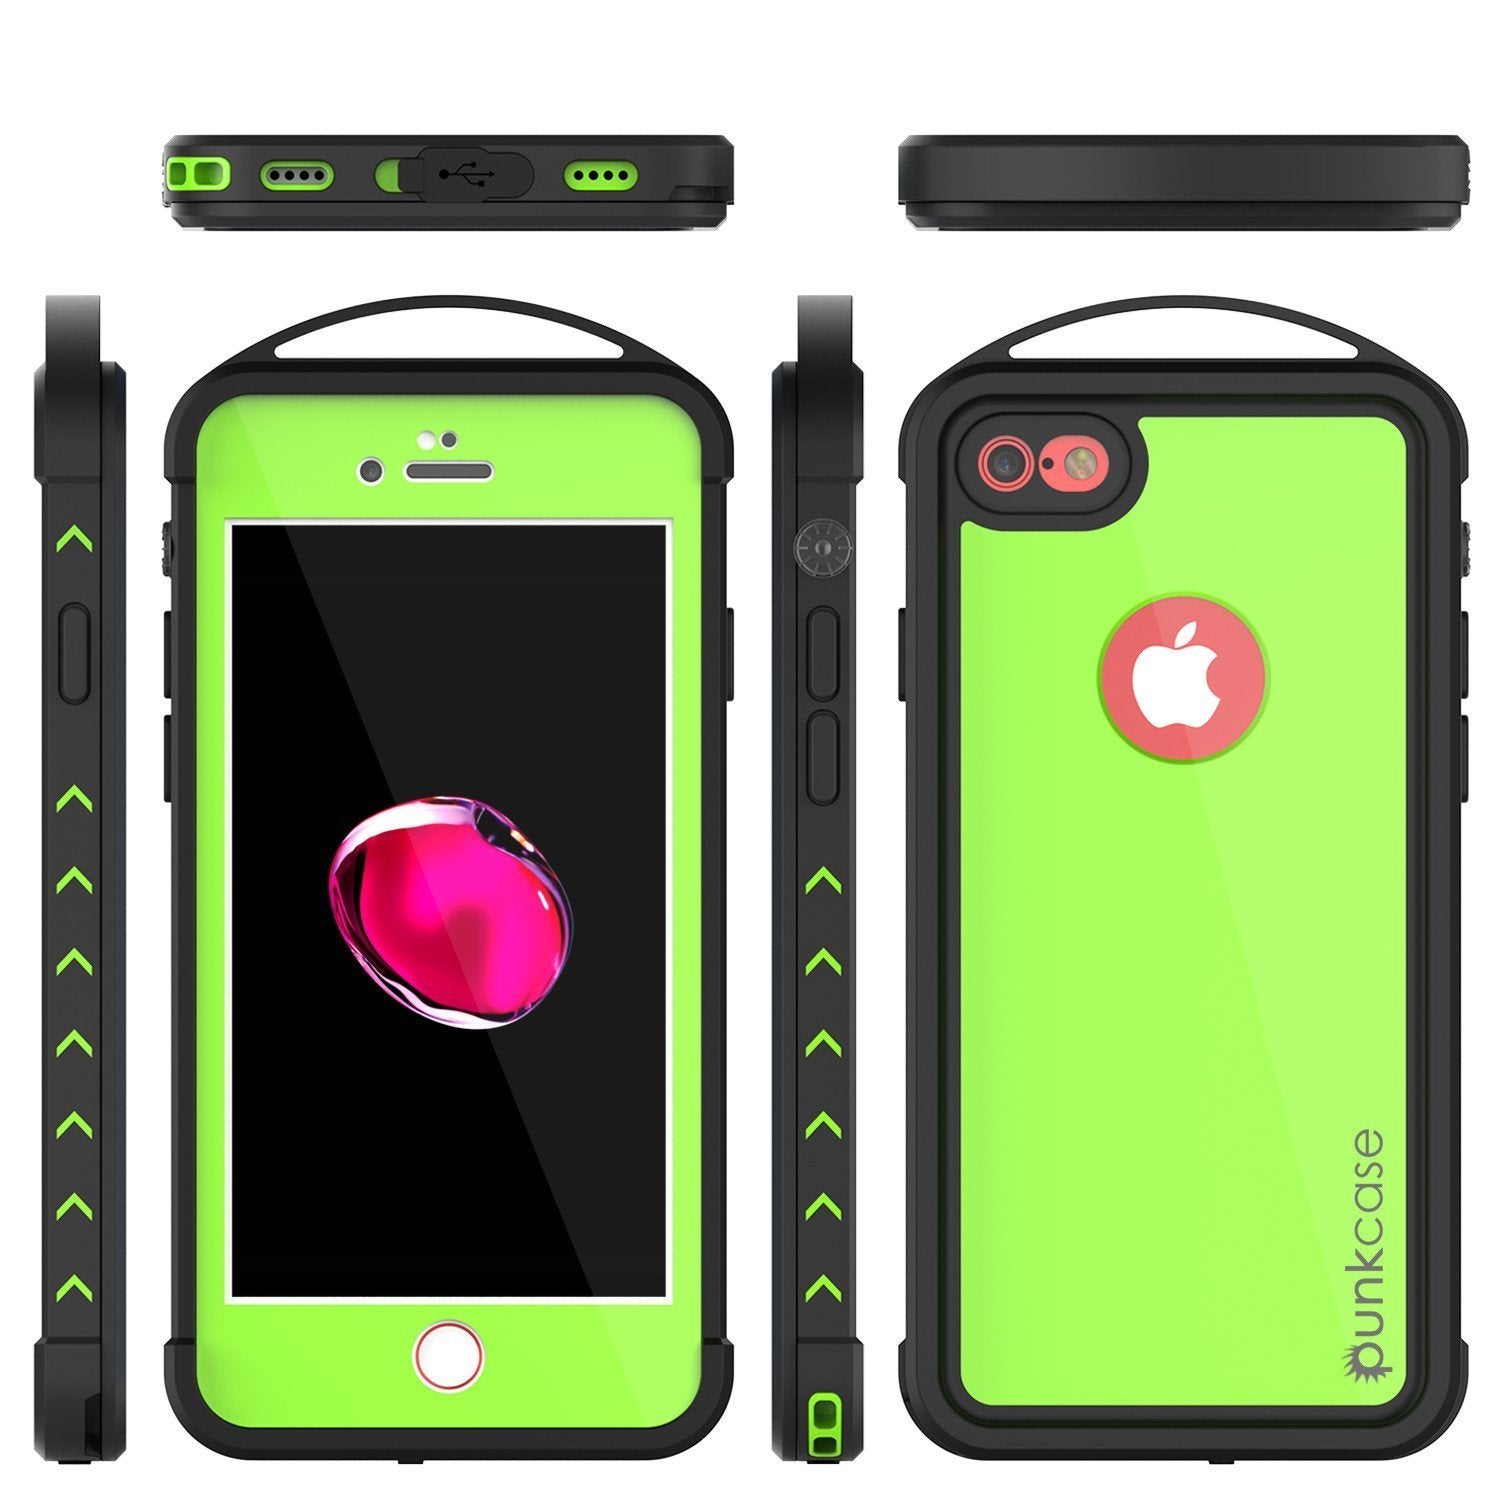 iPhone 8 Waterproof Case, Punkcase ALPINE Series, Light Green | Heavy Duty Armor Cover